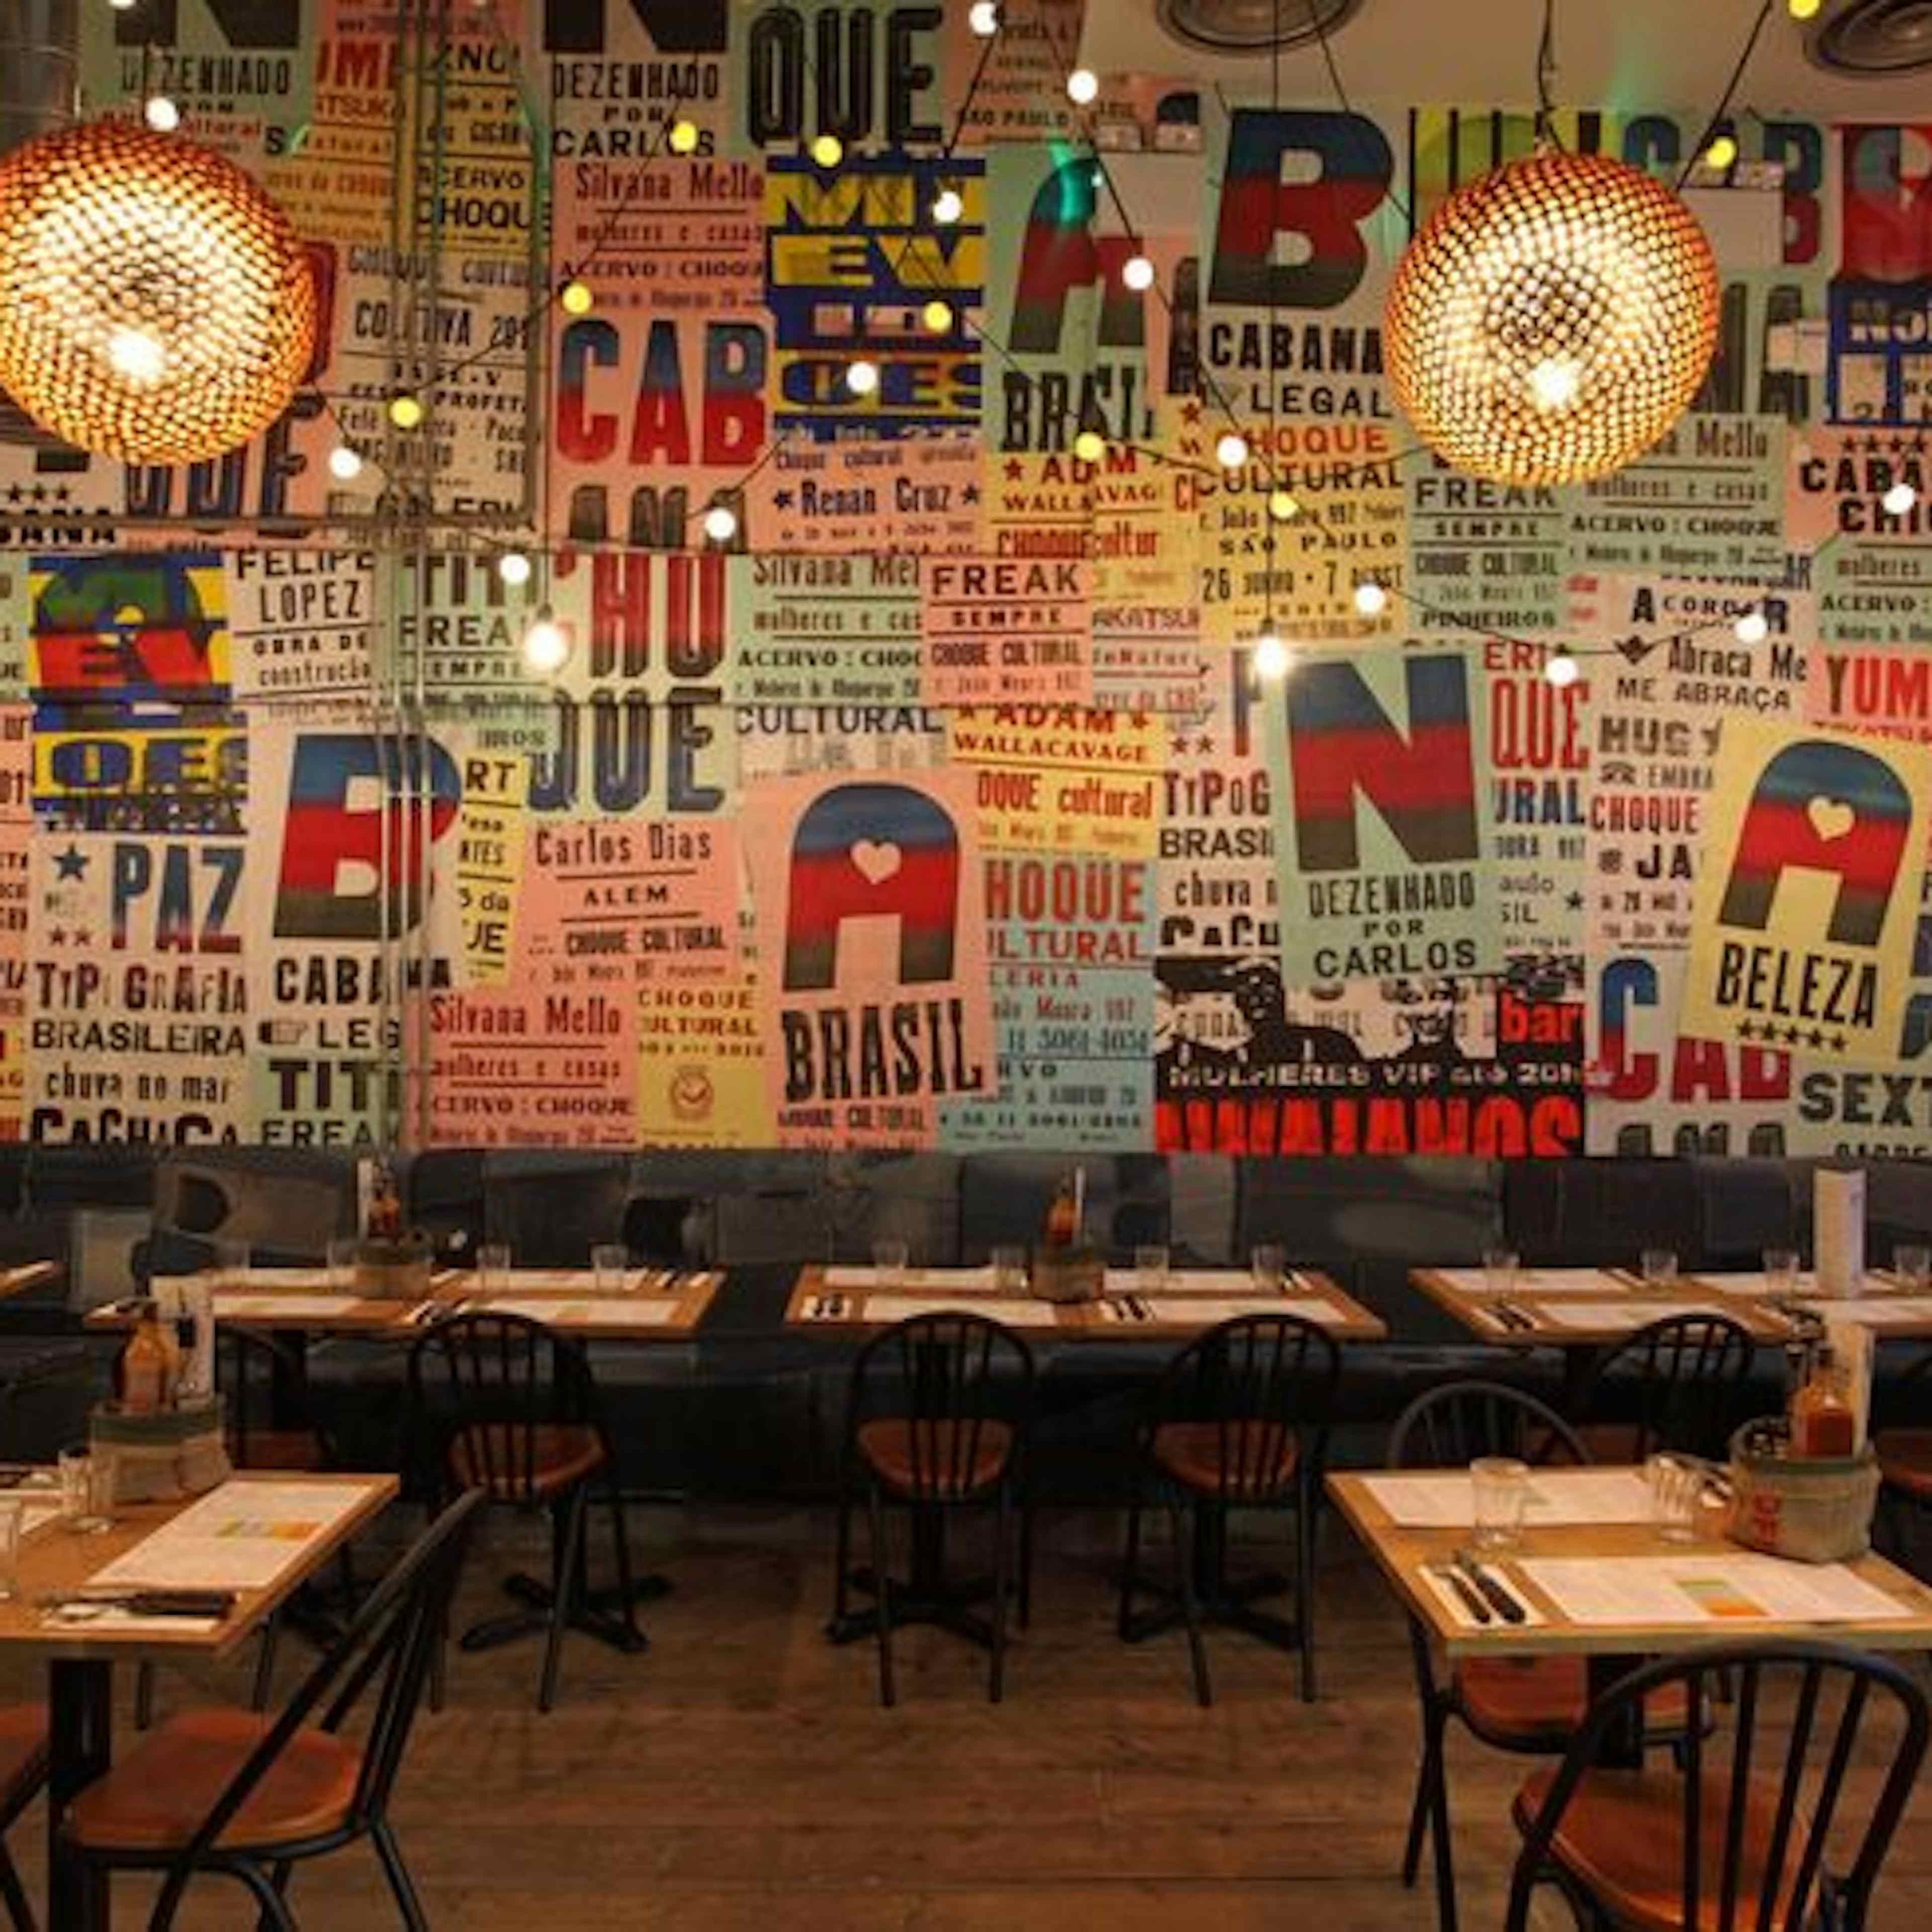 Cabana Stratford - The Rio Restaurant image 2